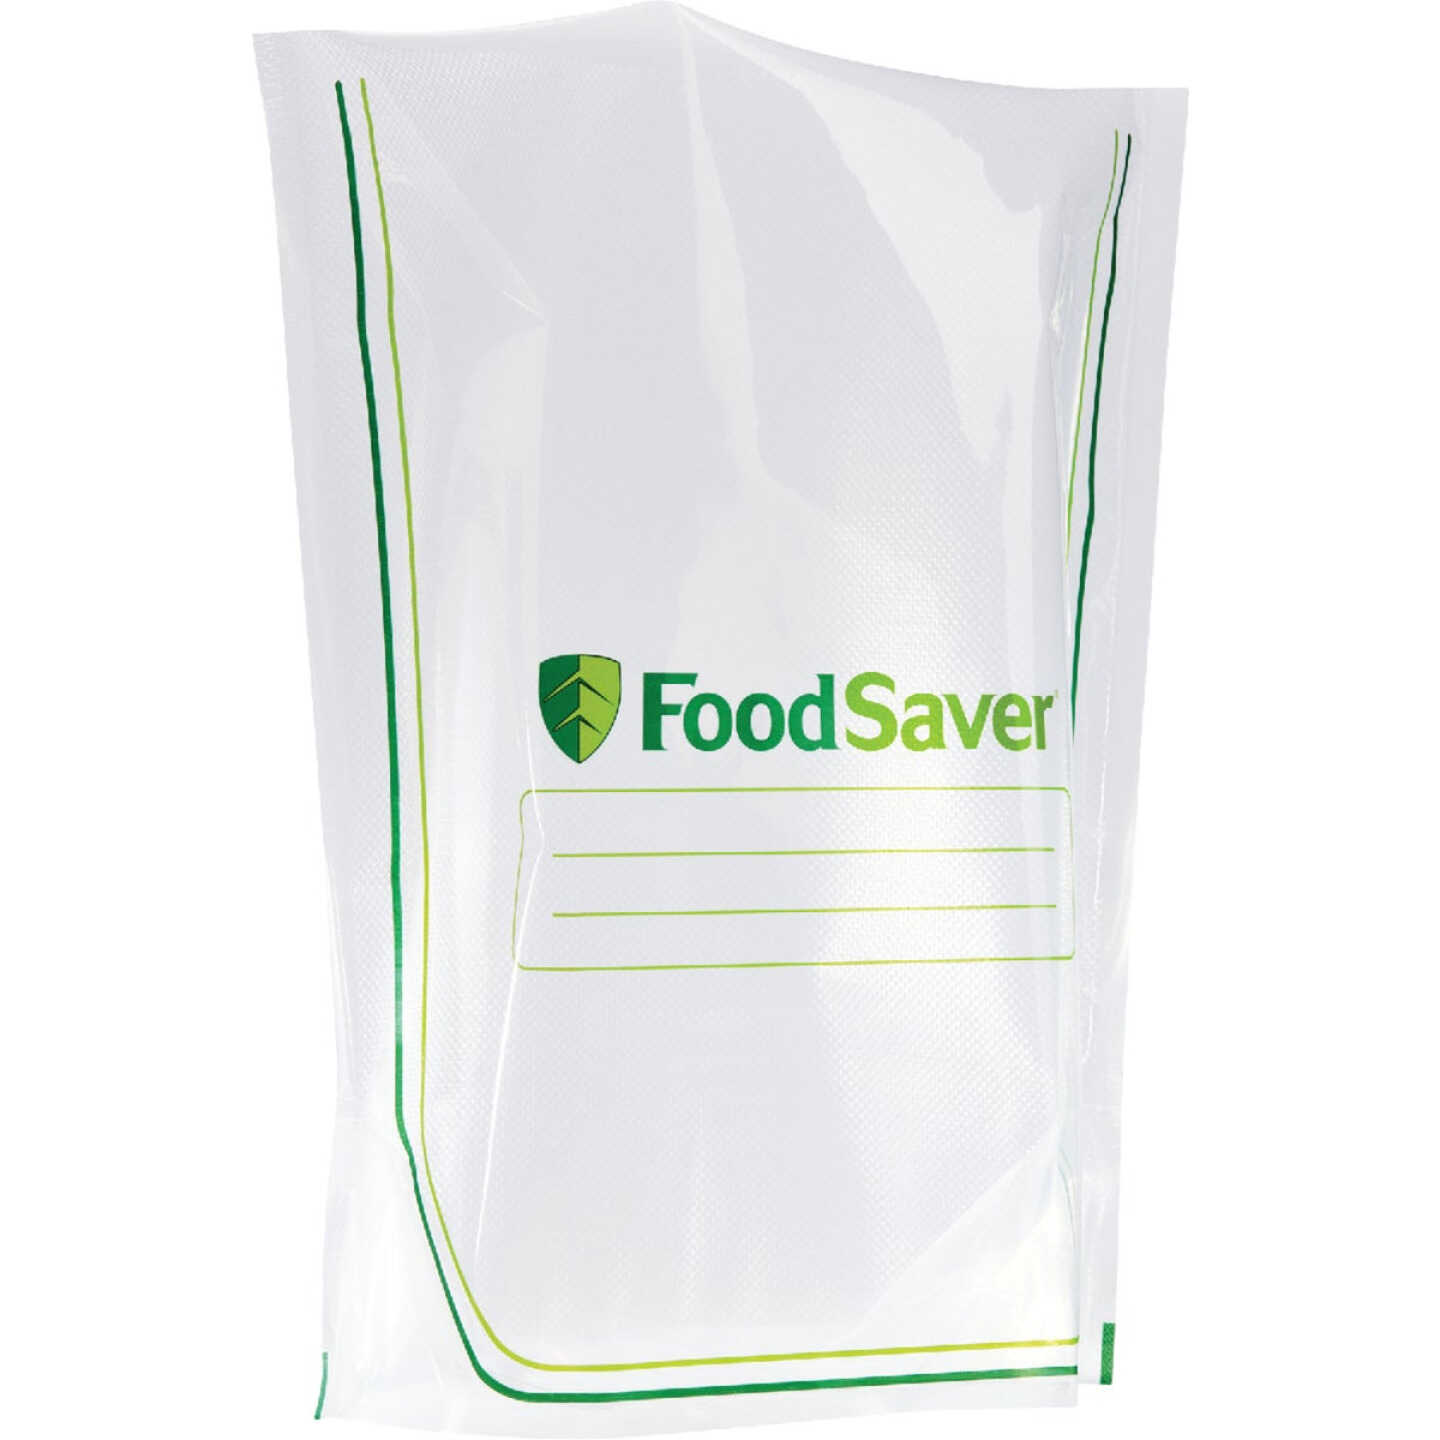 FoodSaver G2 Vacuum Food Sealer System